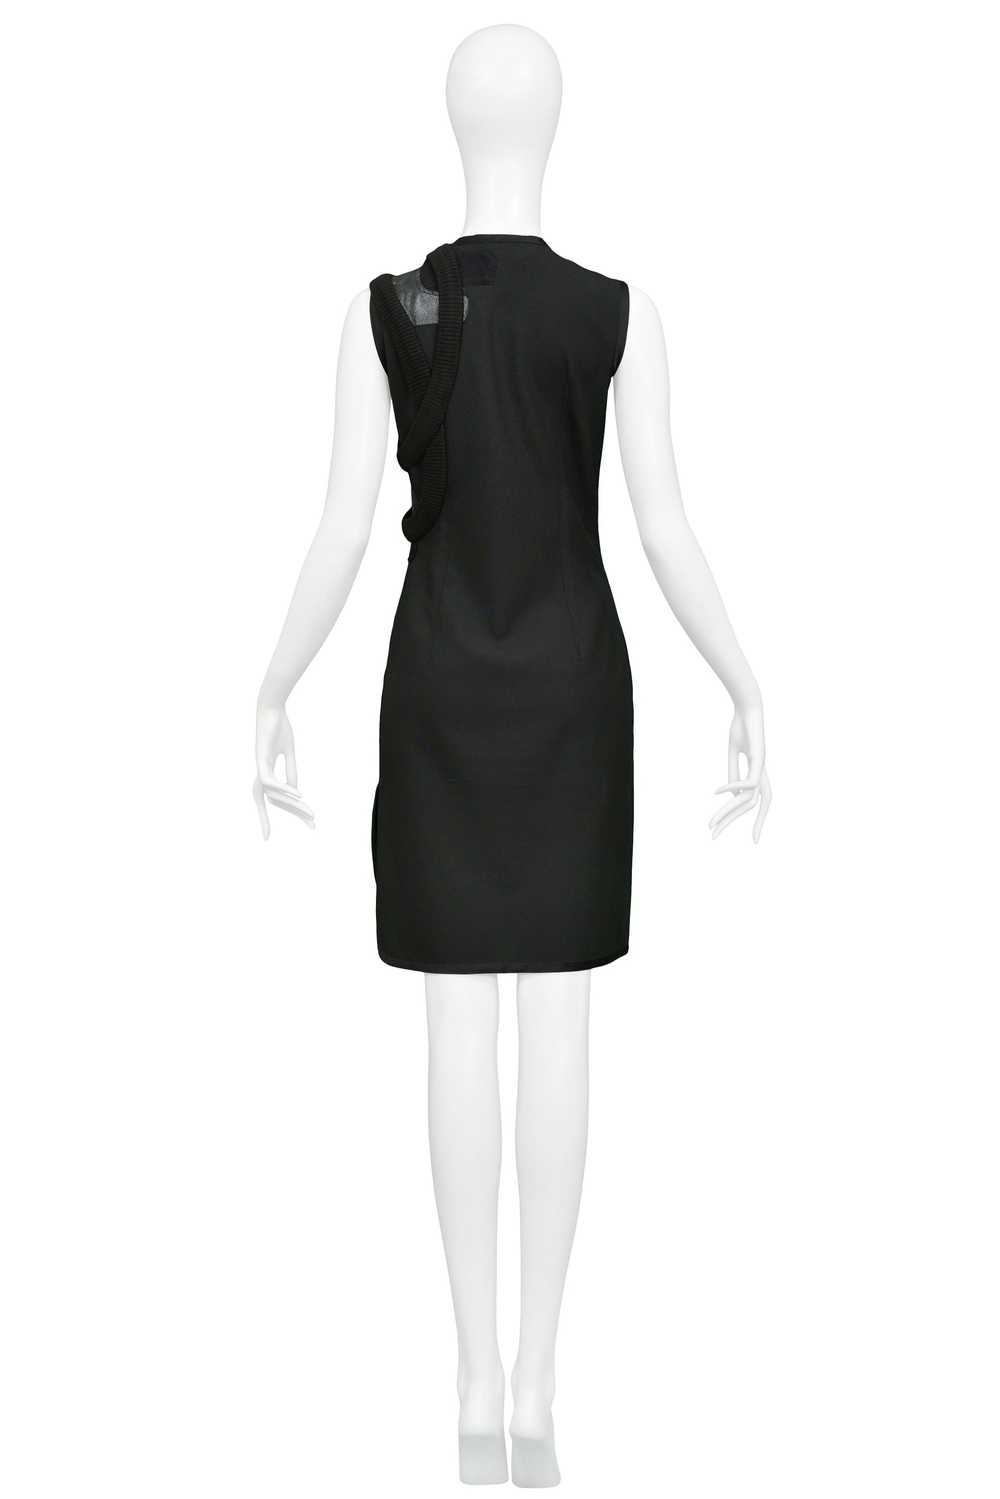 BALENCIAGA EARLY BLACK PATCHWORK SHIFT DRESS 1990S - image 3